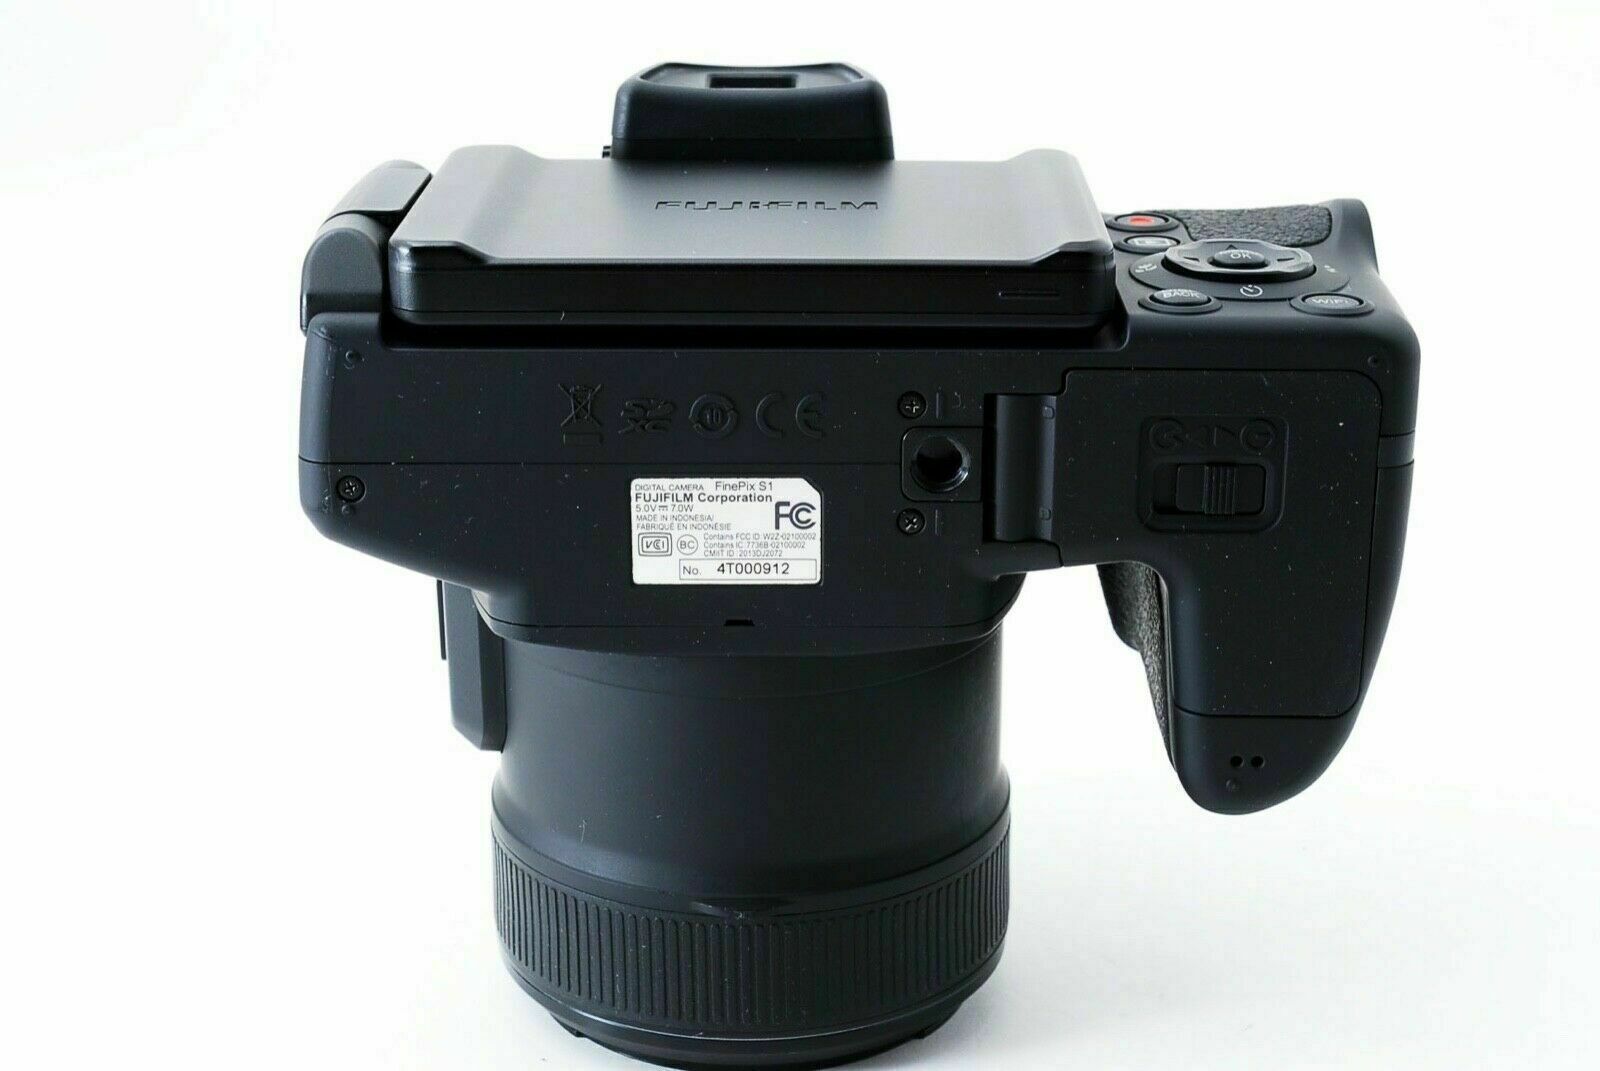 Fujifilm Fuji Fine pix finepix S1 digital camera w. 50x zoom lens *superb